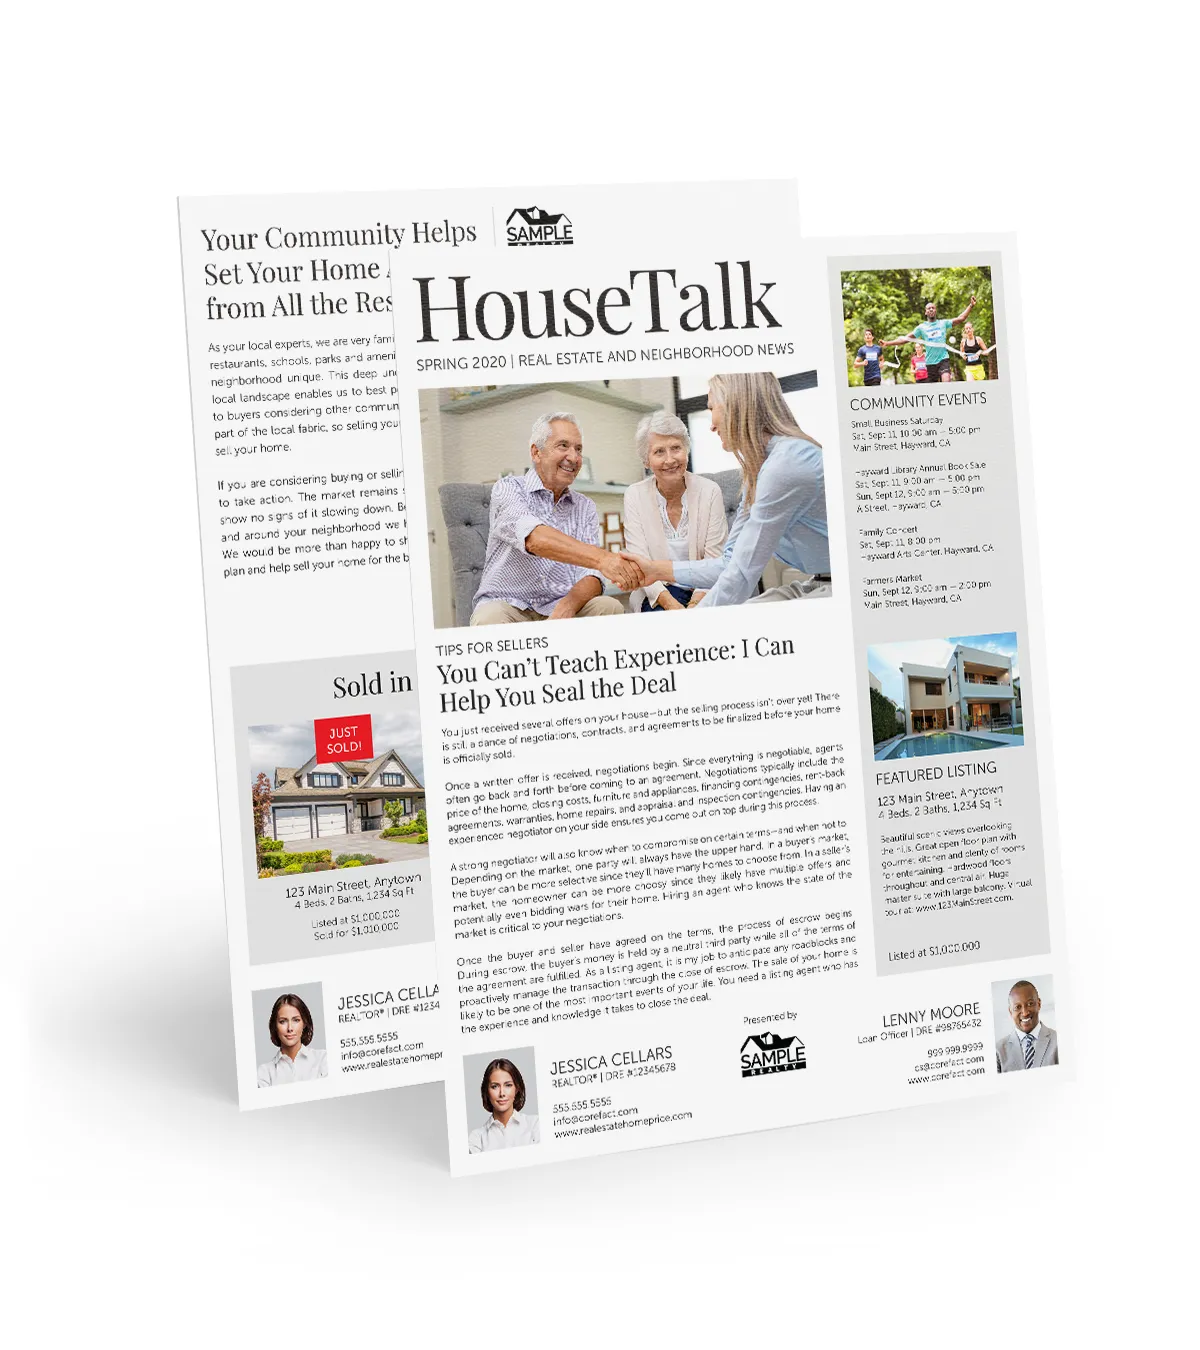 House Talk Newsletter - Closing The Deal (Team)